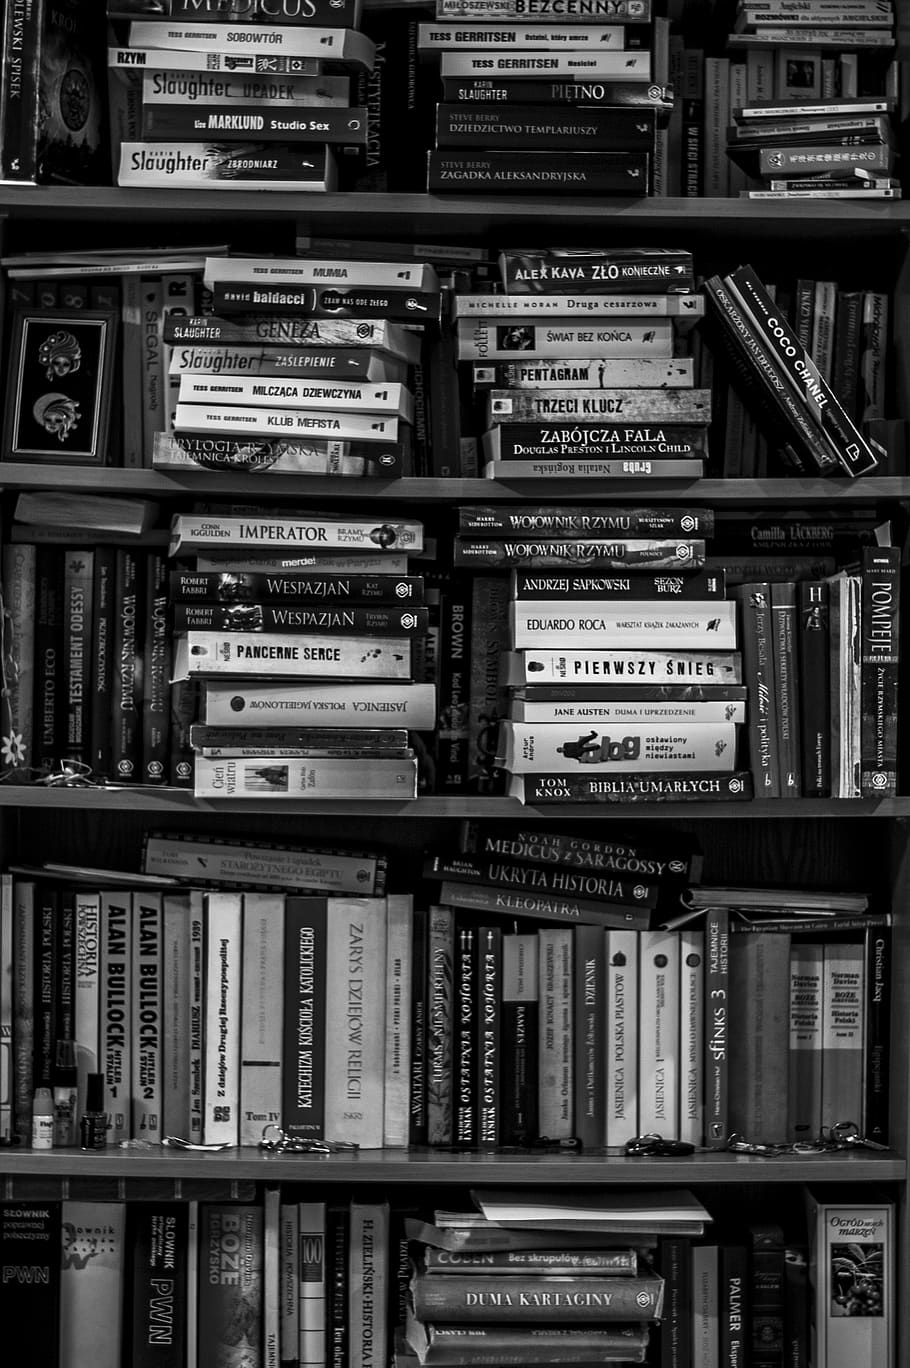 black book shelves